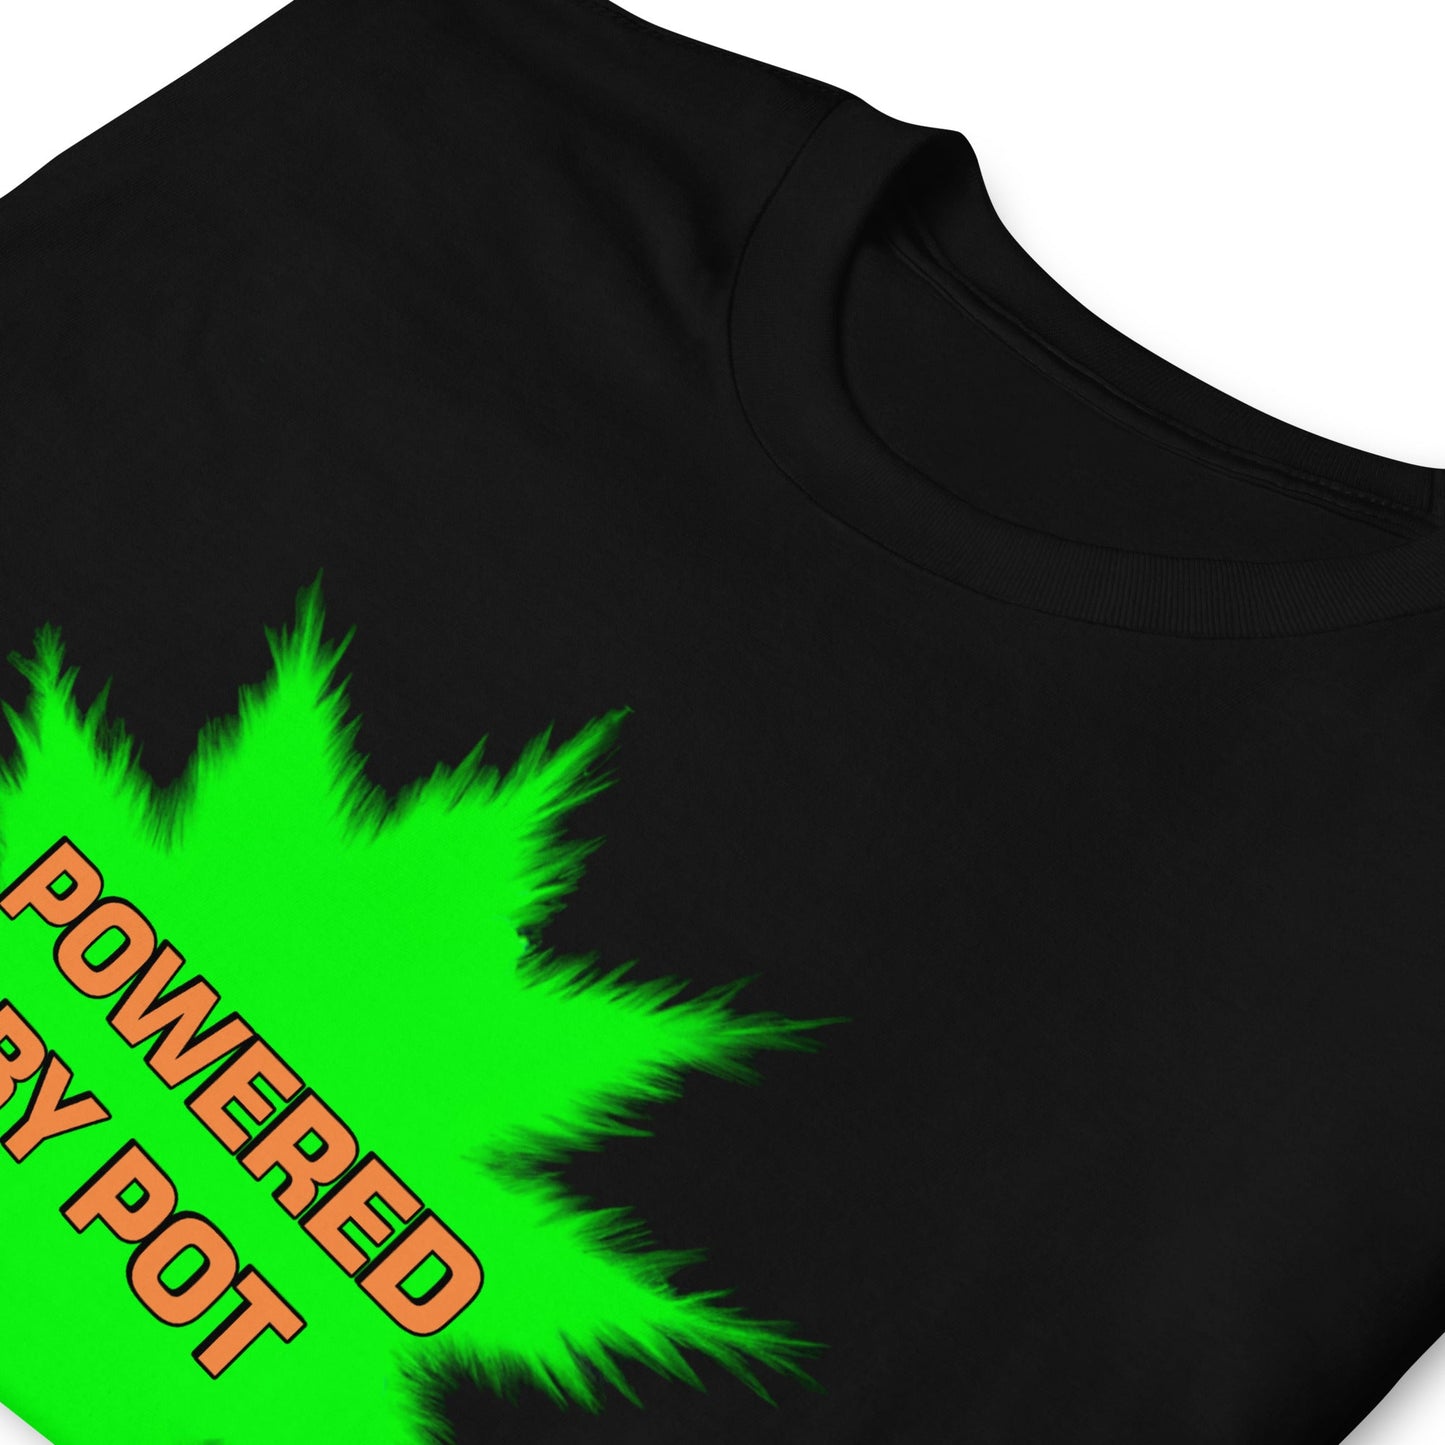 POWERED BY POT Short-Sleeve Unisex T-Shirt / THC Energy - Lizard Vigilante